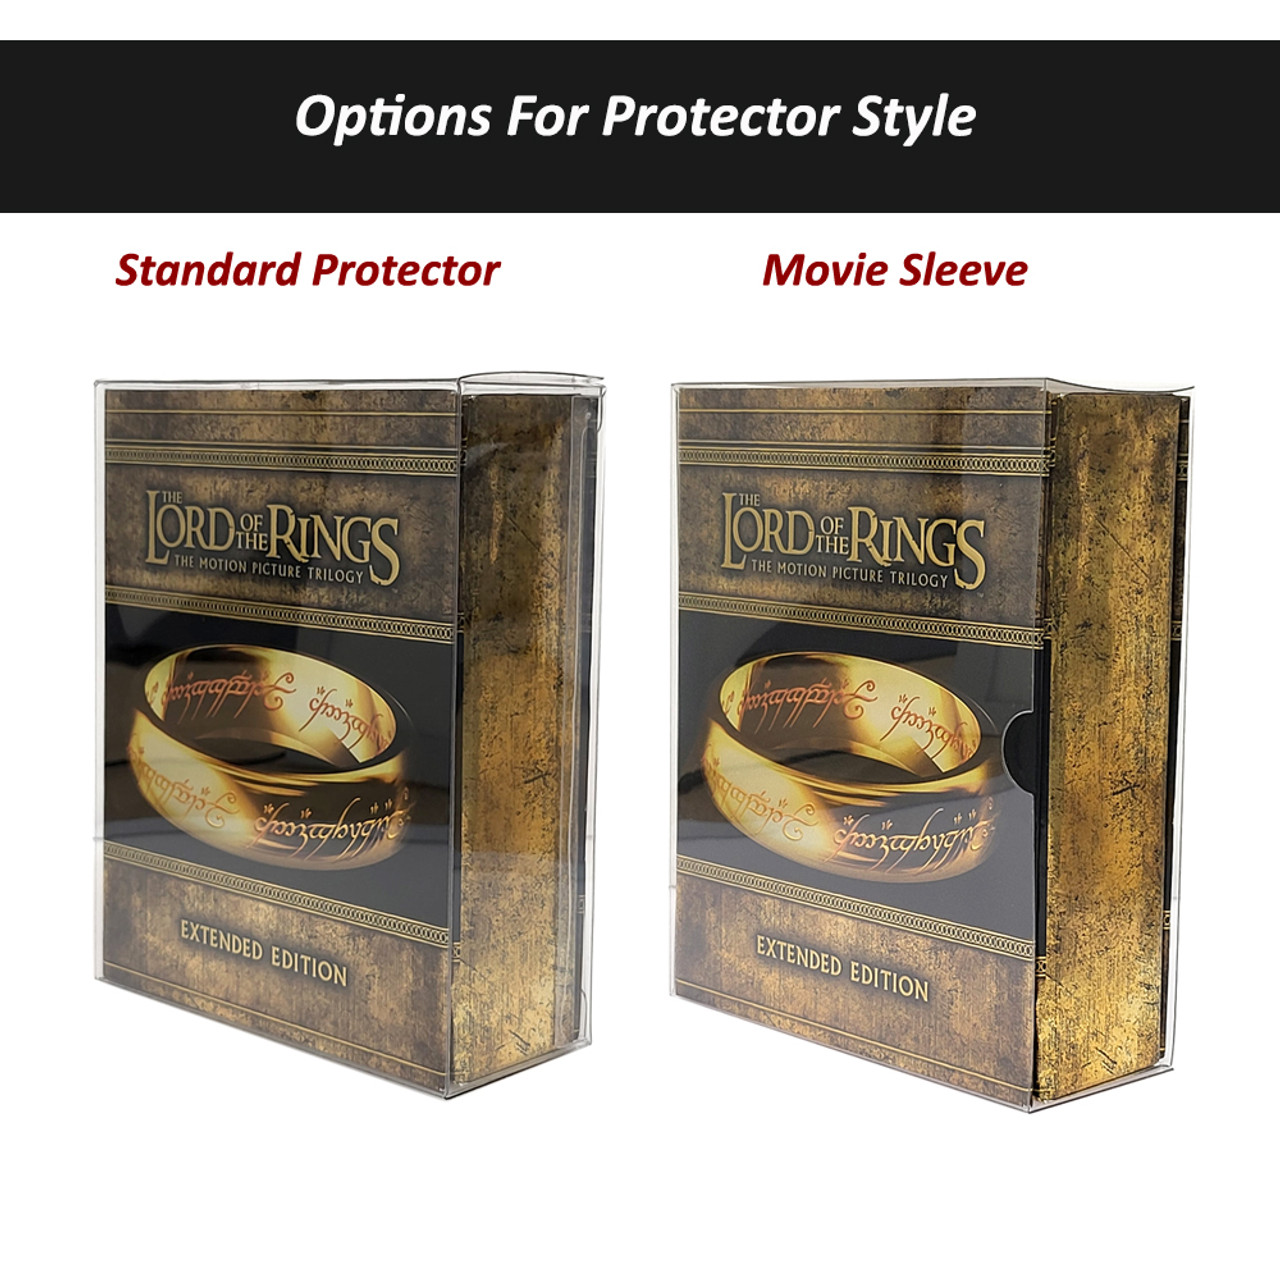 Protector For Disney DVD box